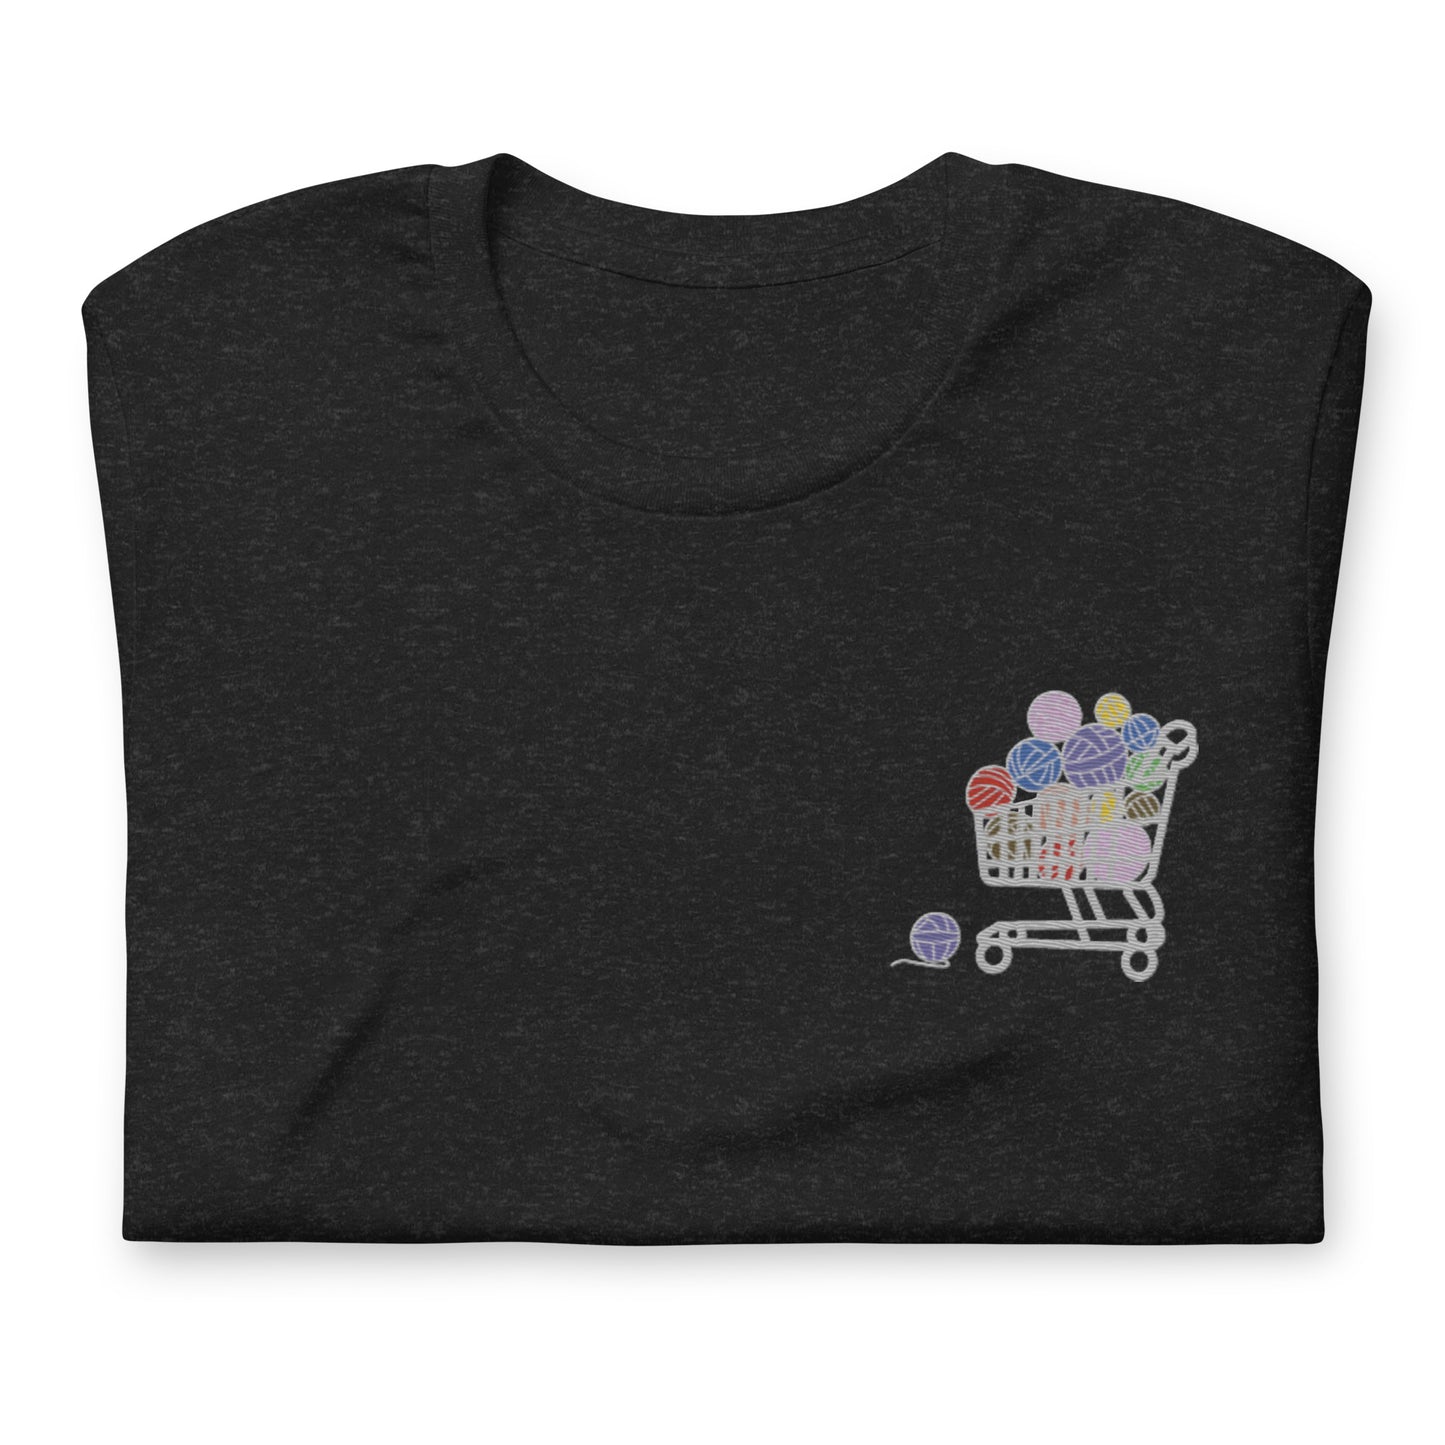 Unisex T-Shirt "Yarn Shopping Cart" | XS-5XL Sizing